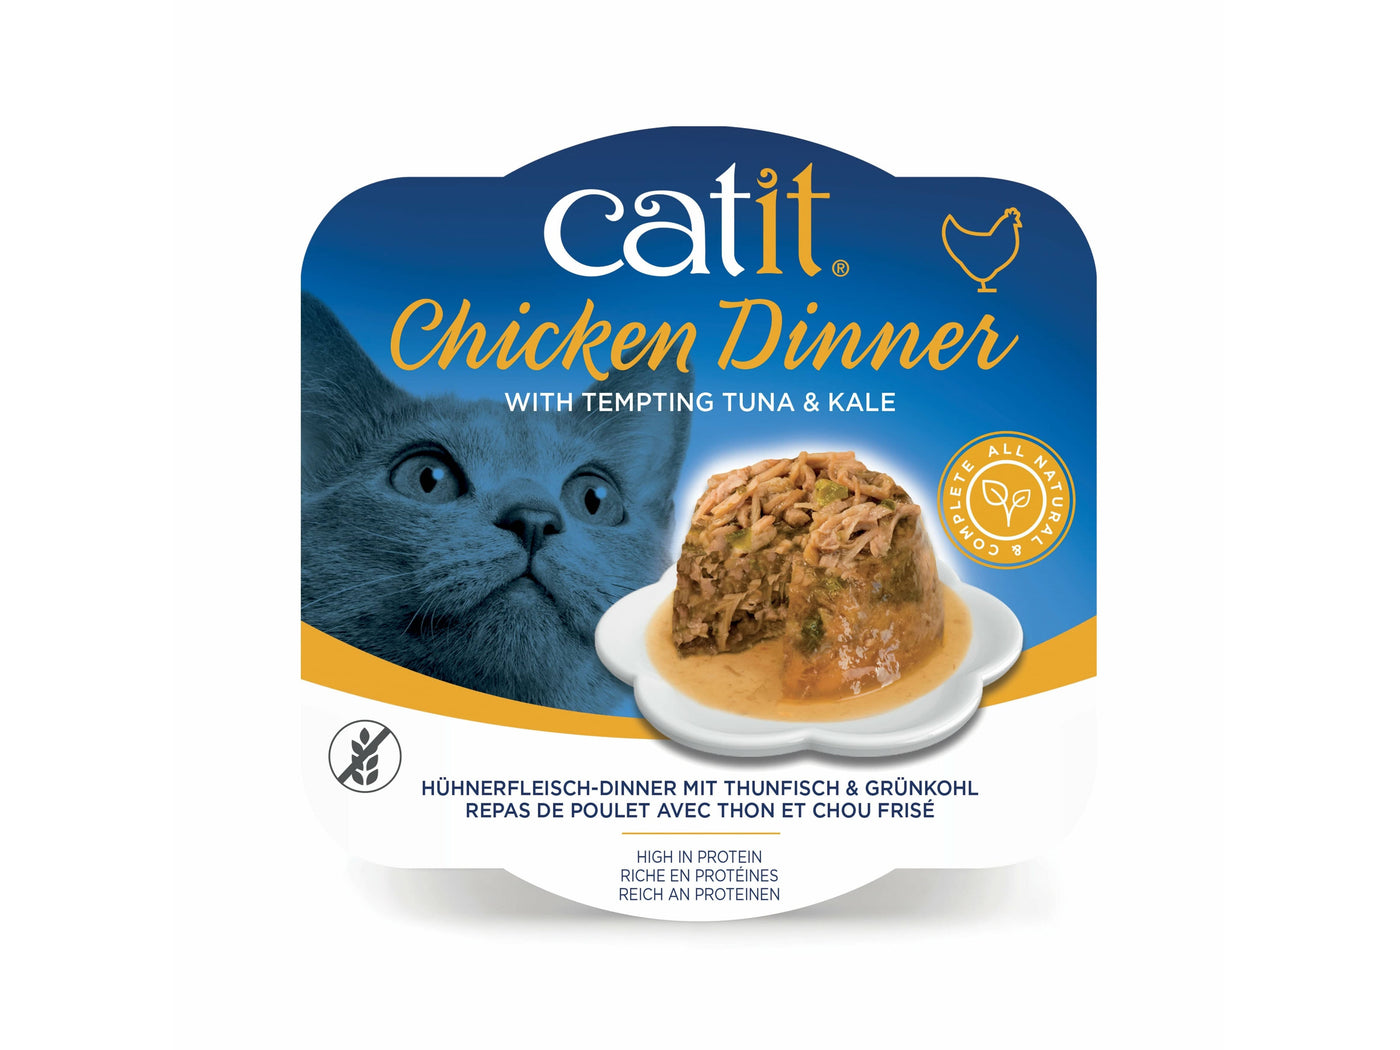 Catit Chicken Dinner, Tuna & Kale 80 g, 6pcs/box